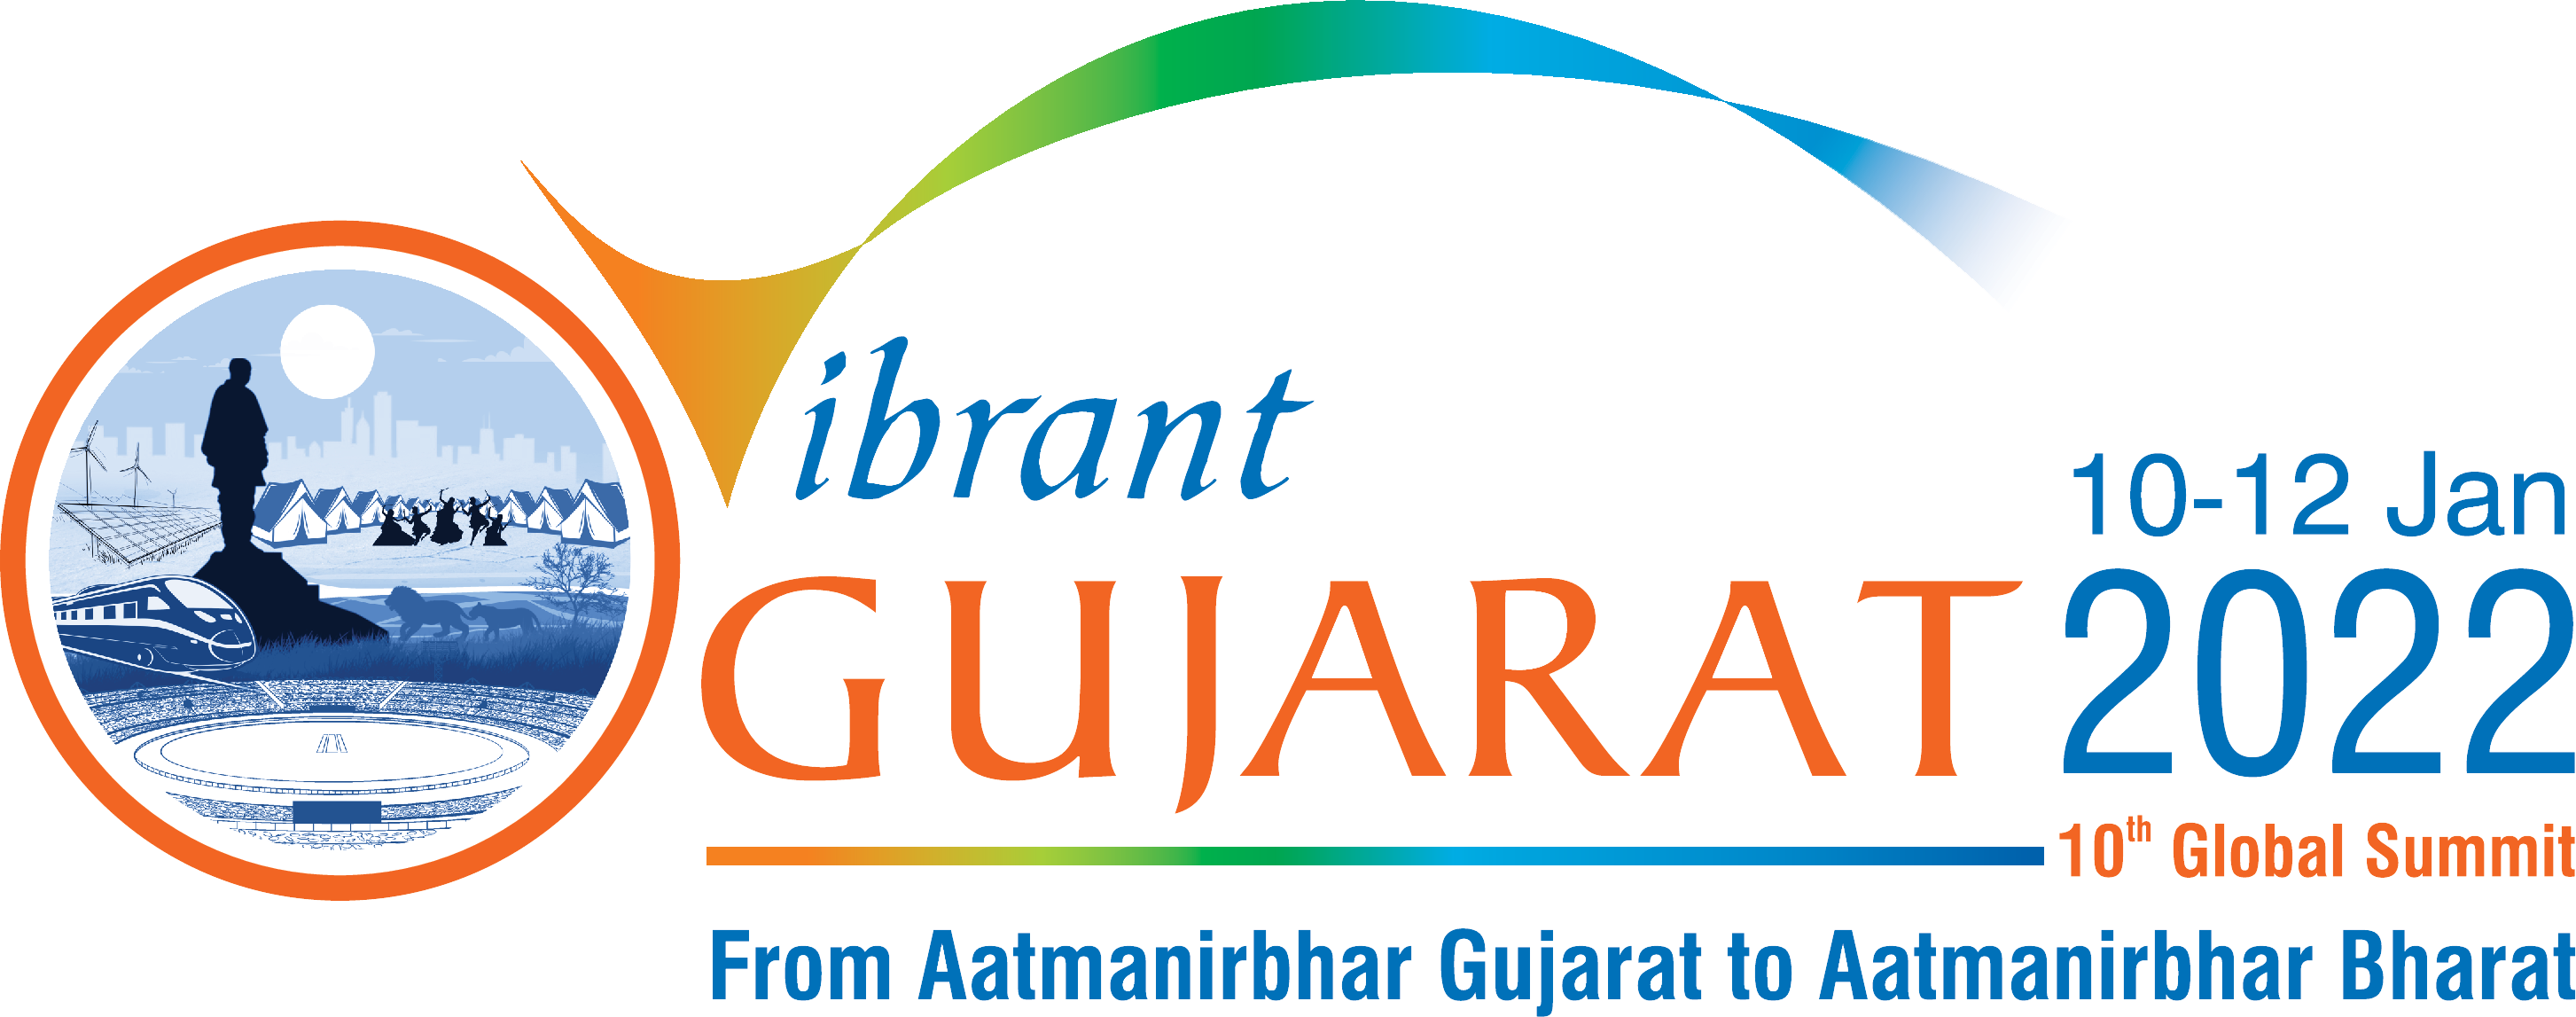 Vibrant Gujarat Summit postponed amid rising COVID-19 cases